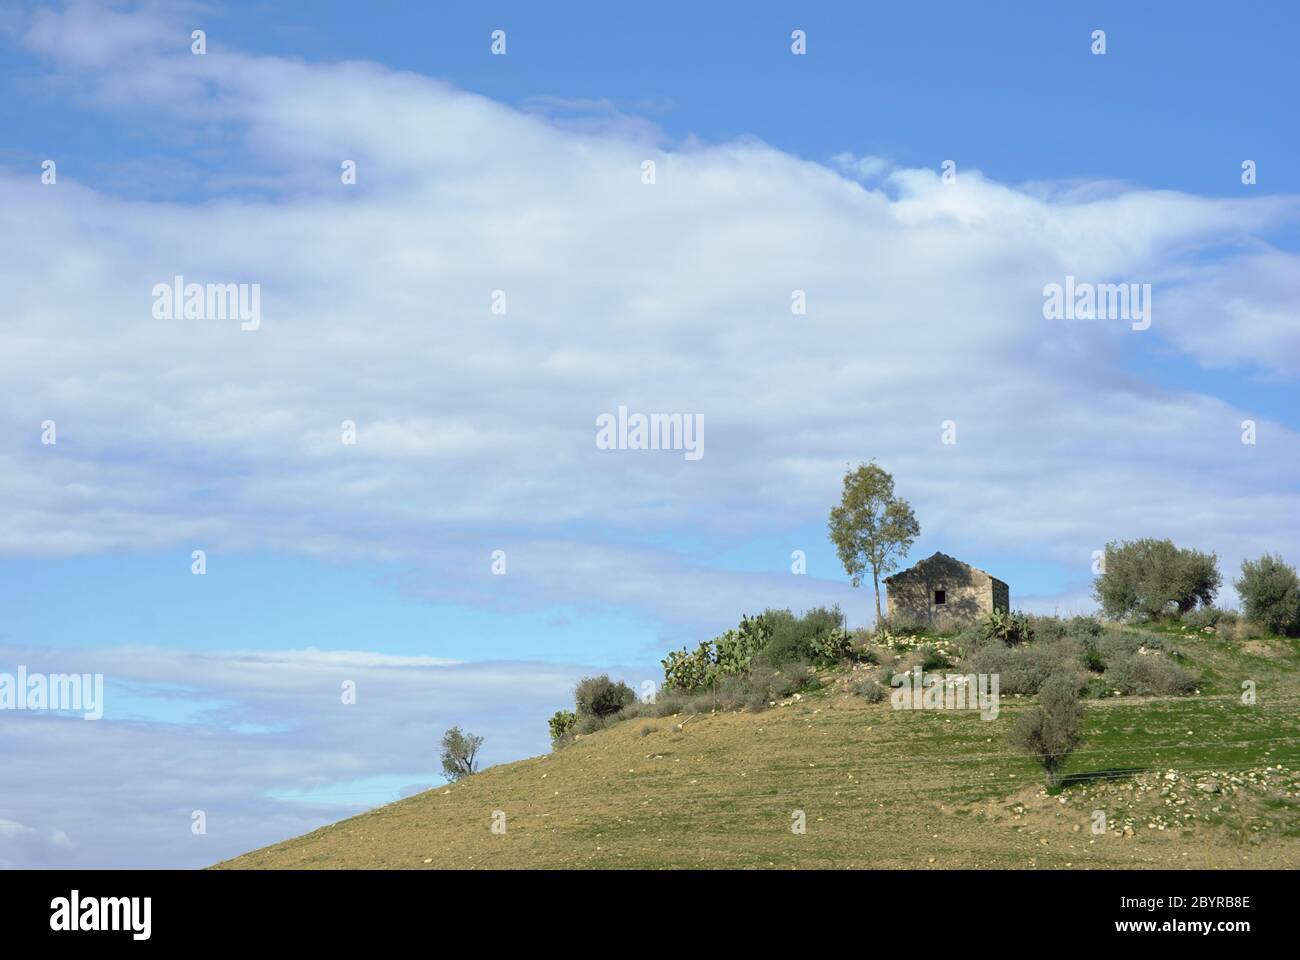 Landhaus auf Hügel in Sizilien Reisen Stockfoto